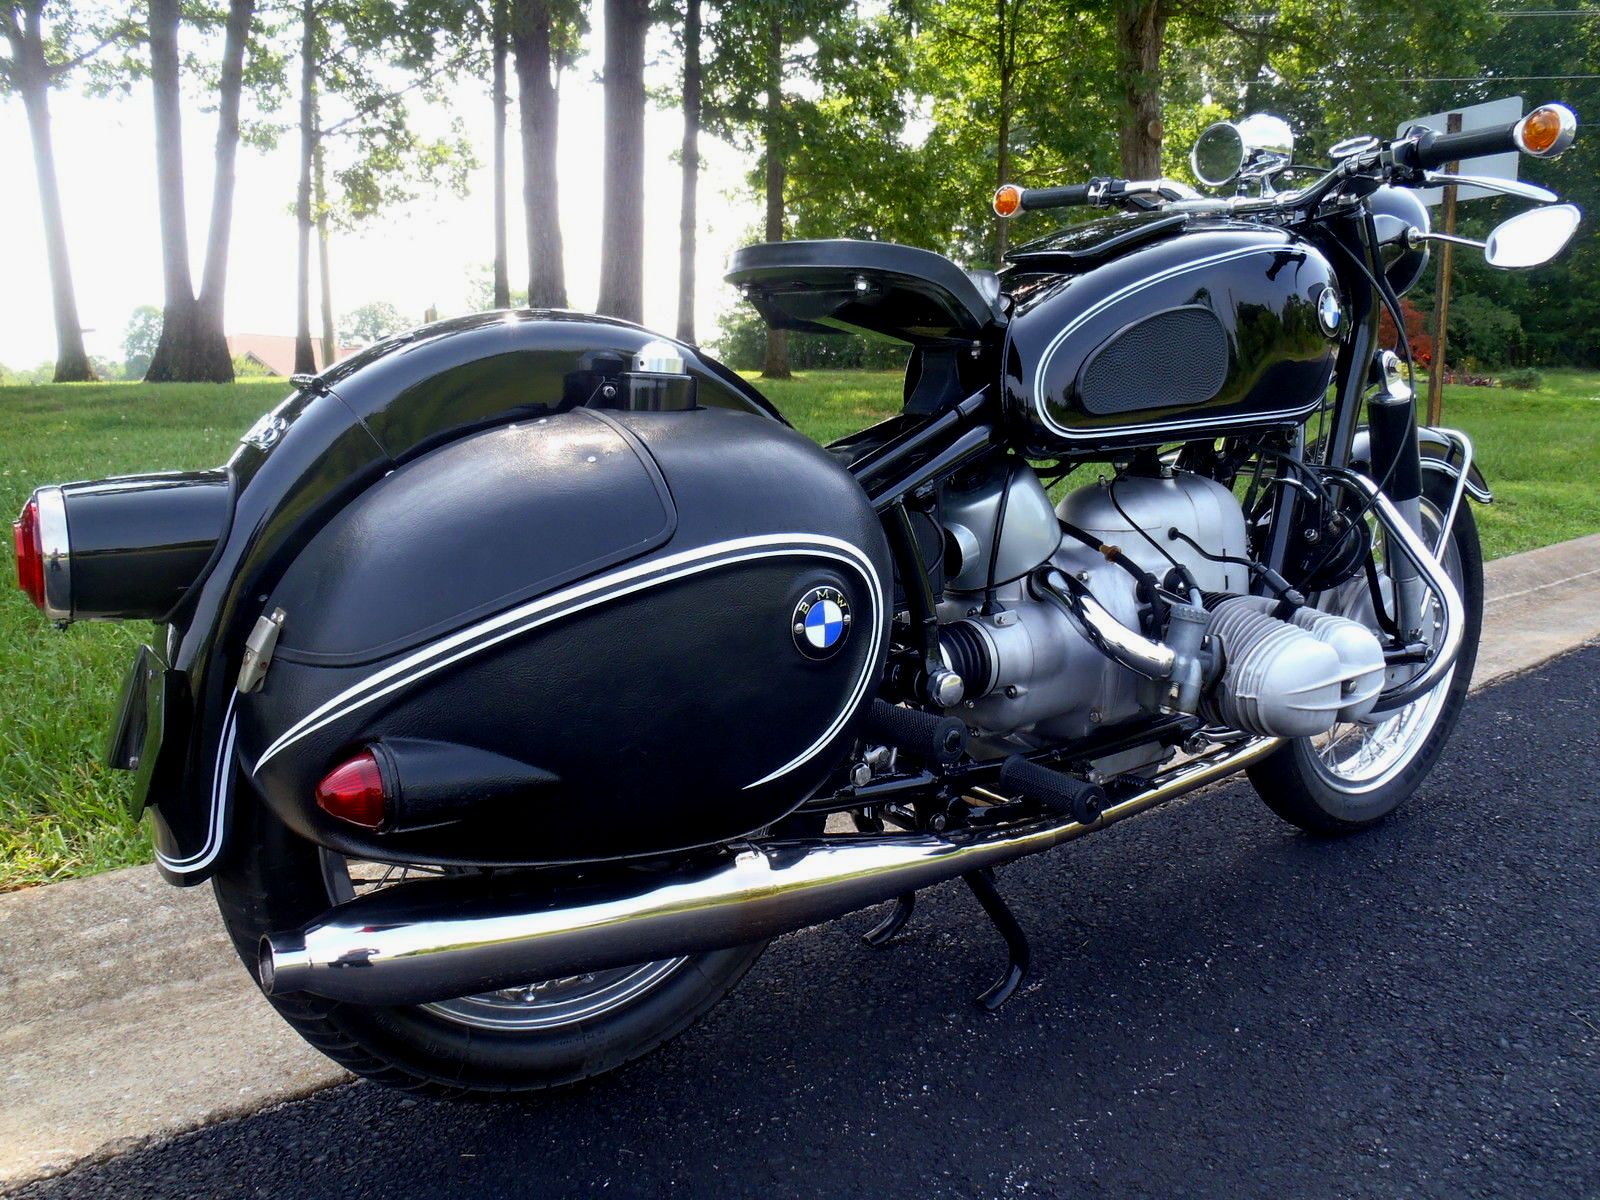 BMW R69S Motorcycle Rental in Los Angeles. BMW R69S Motorcycle Rental for Commercial Studio Shoots. Classic Motorcycle Rentals.